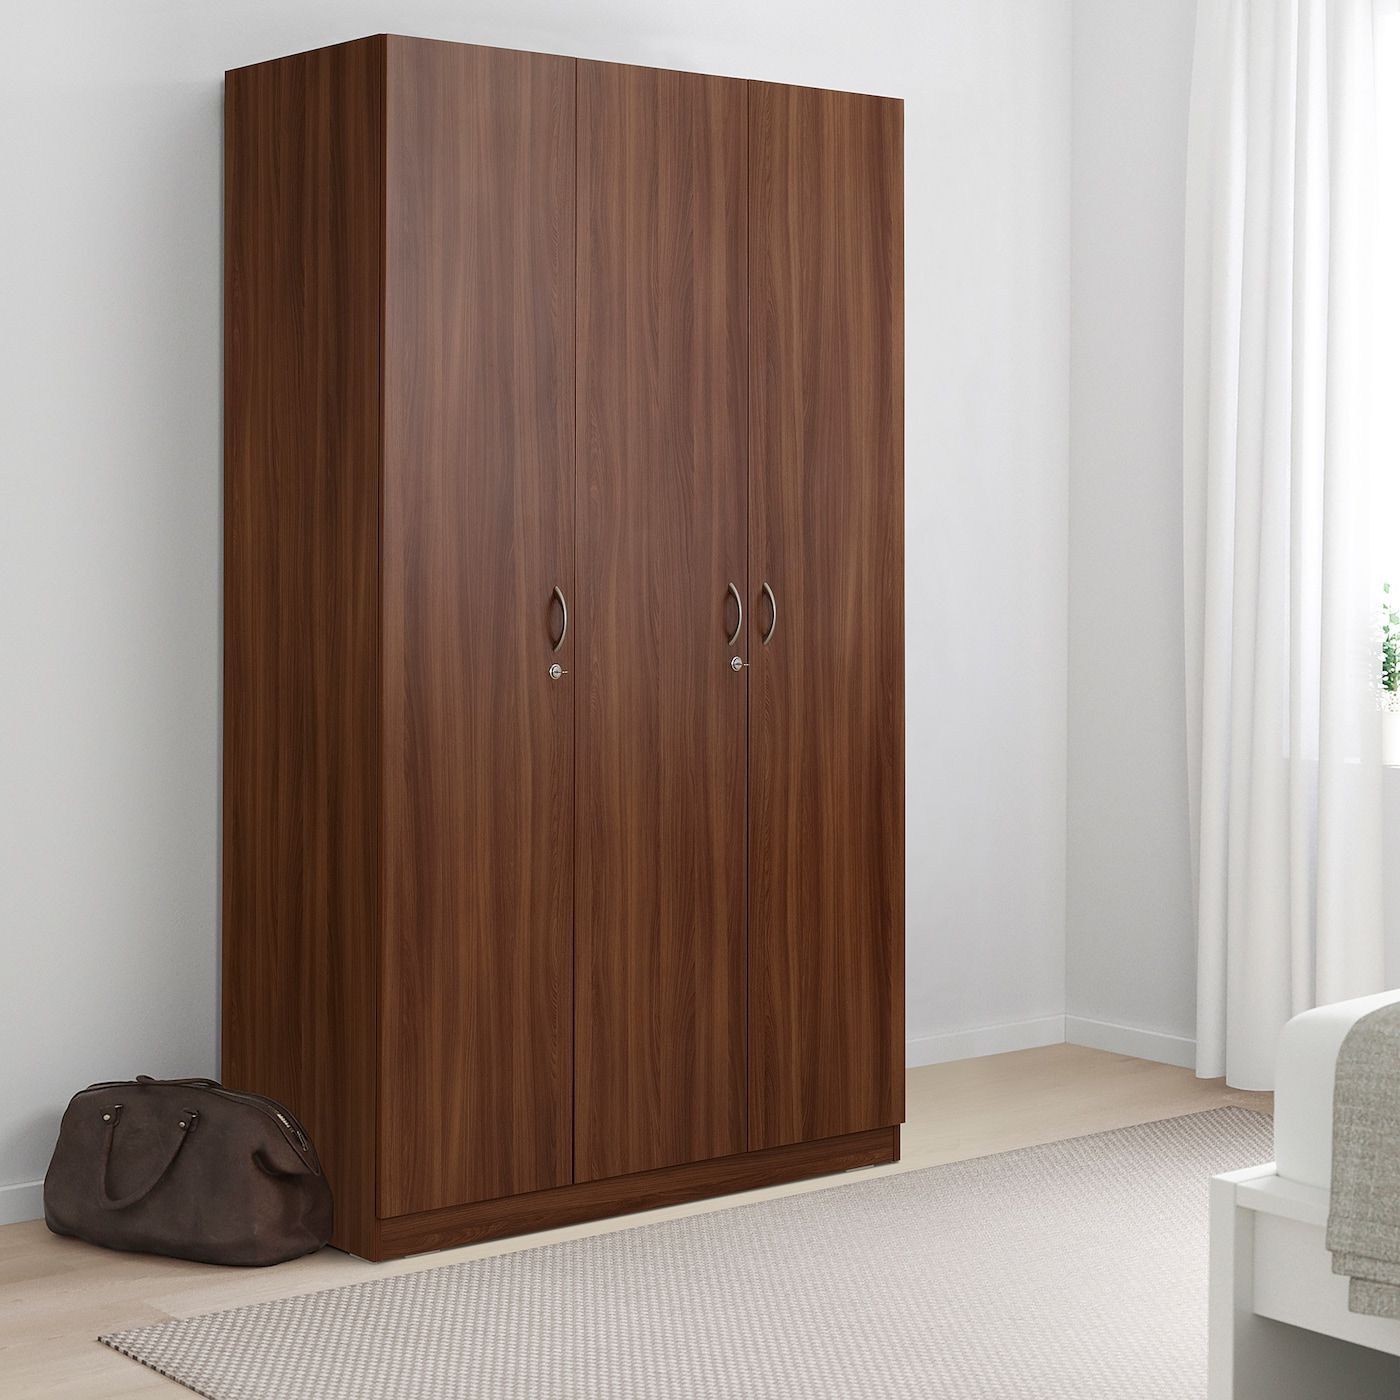 Nodeland Wardrobe With 3 Doors, Medium Brown, 120x52x202 Cm  (471/4x203/8x791/2") – Ikea Inside Famous Medium Size Wardrobes (View 10 of 10)